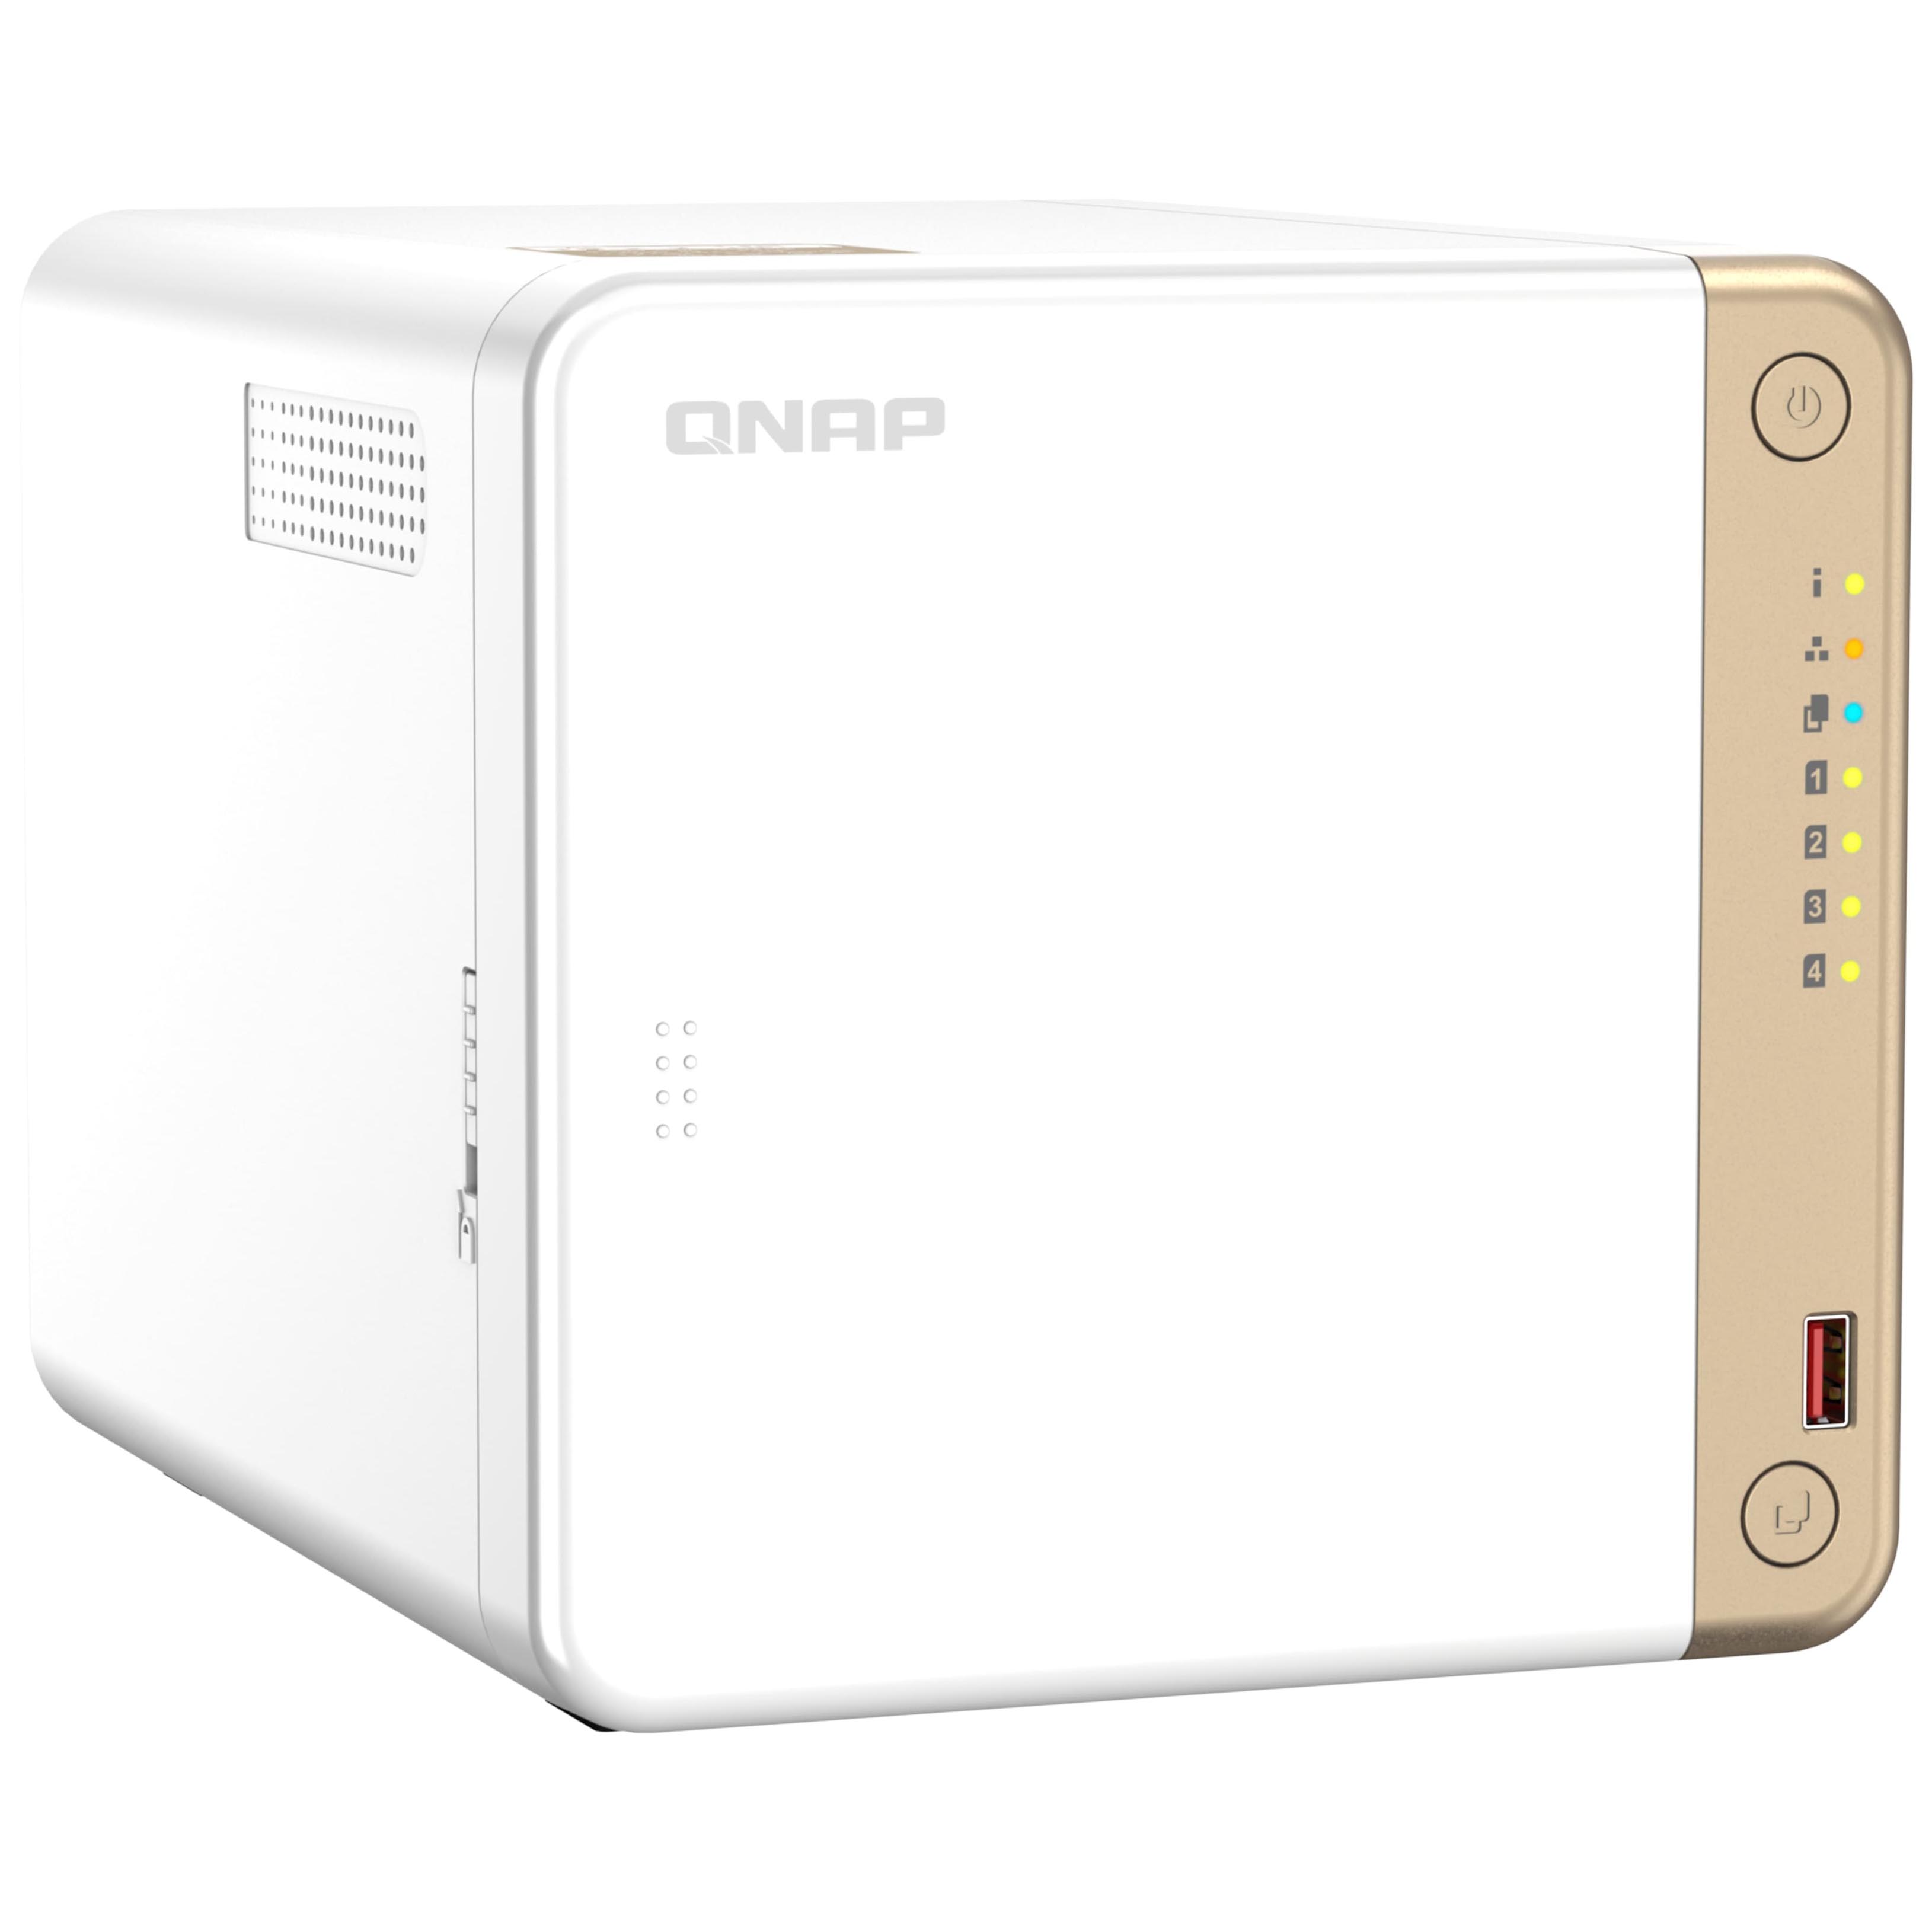 Сетевое хранилище QNAP TS-462 Nas, 4 отсека, без дисков, белый сетевое хранилище nas qnap ts 464u rp 8g